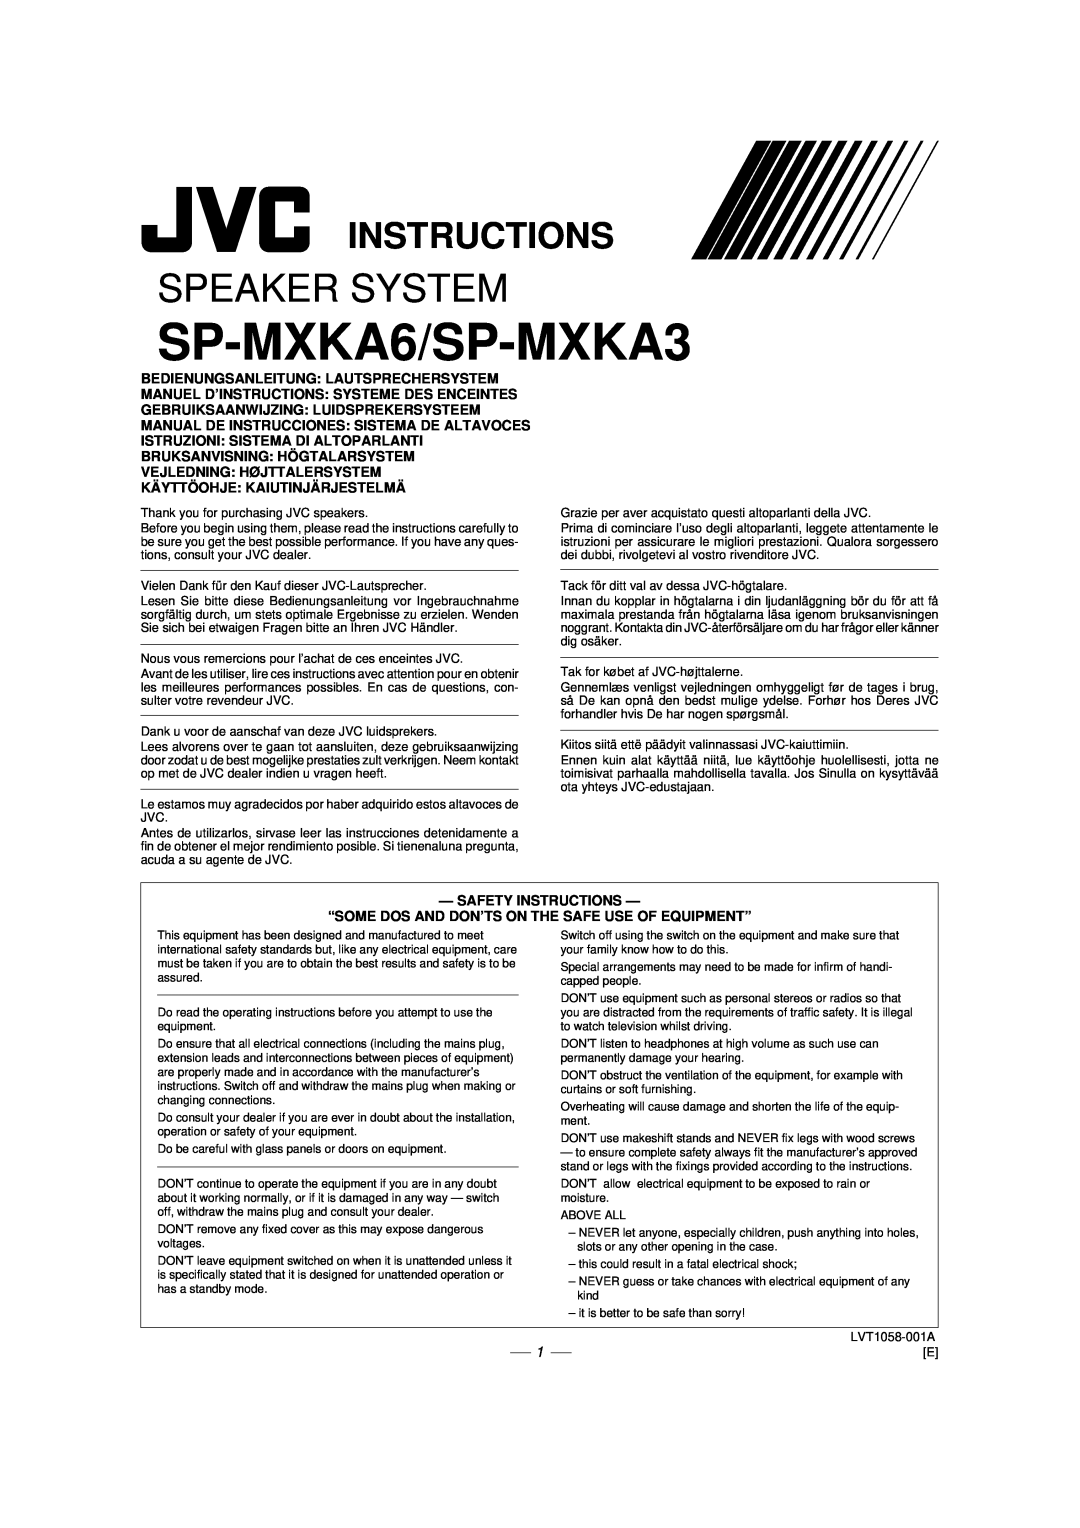 JVC CA-MXKA6 Bedienungsanleitung Lautsprechersystem, Manuel D’Instructions Systeme Des Enceintes, Safety Instructions 